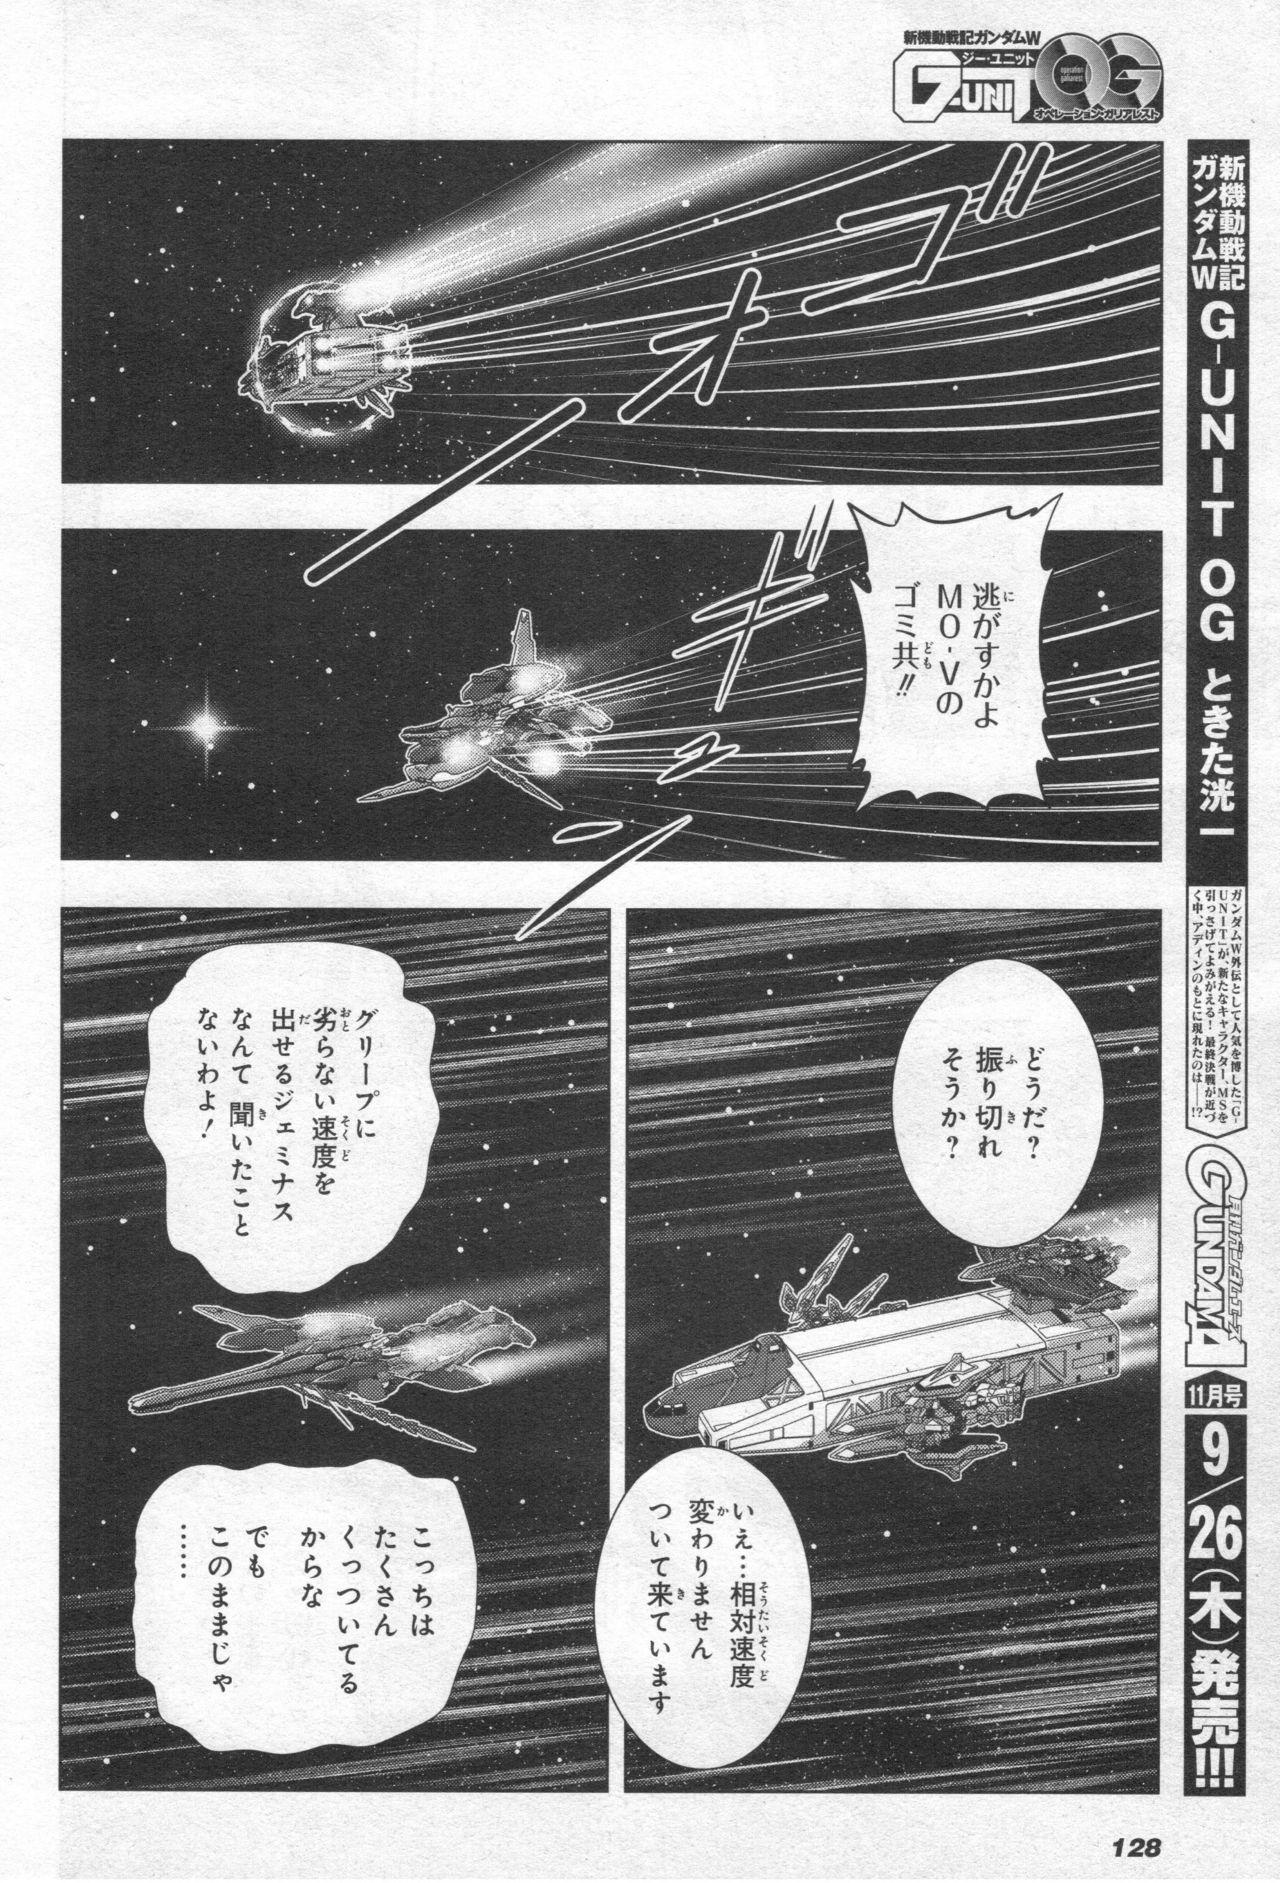 Gundam Ace - October 2019 130